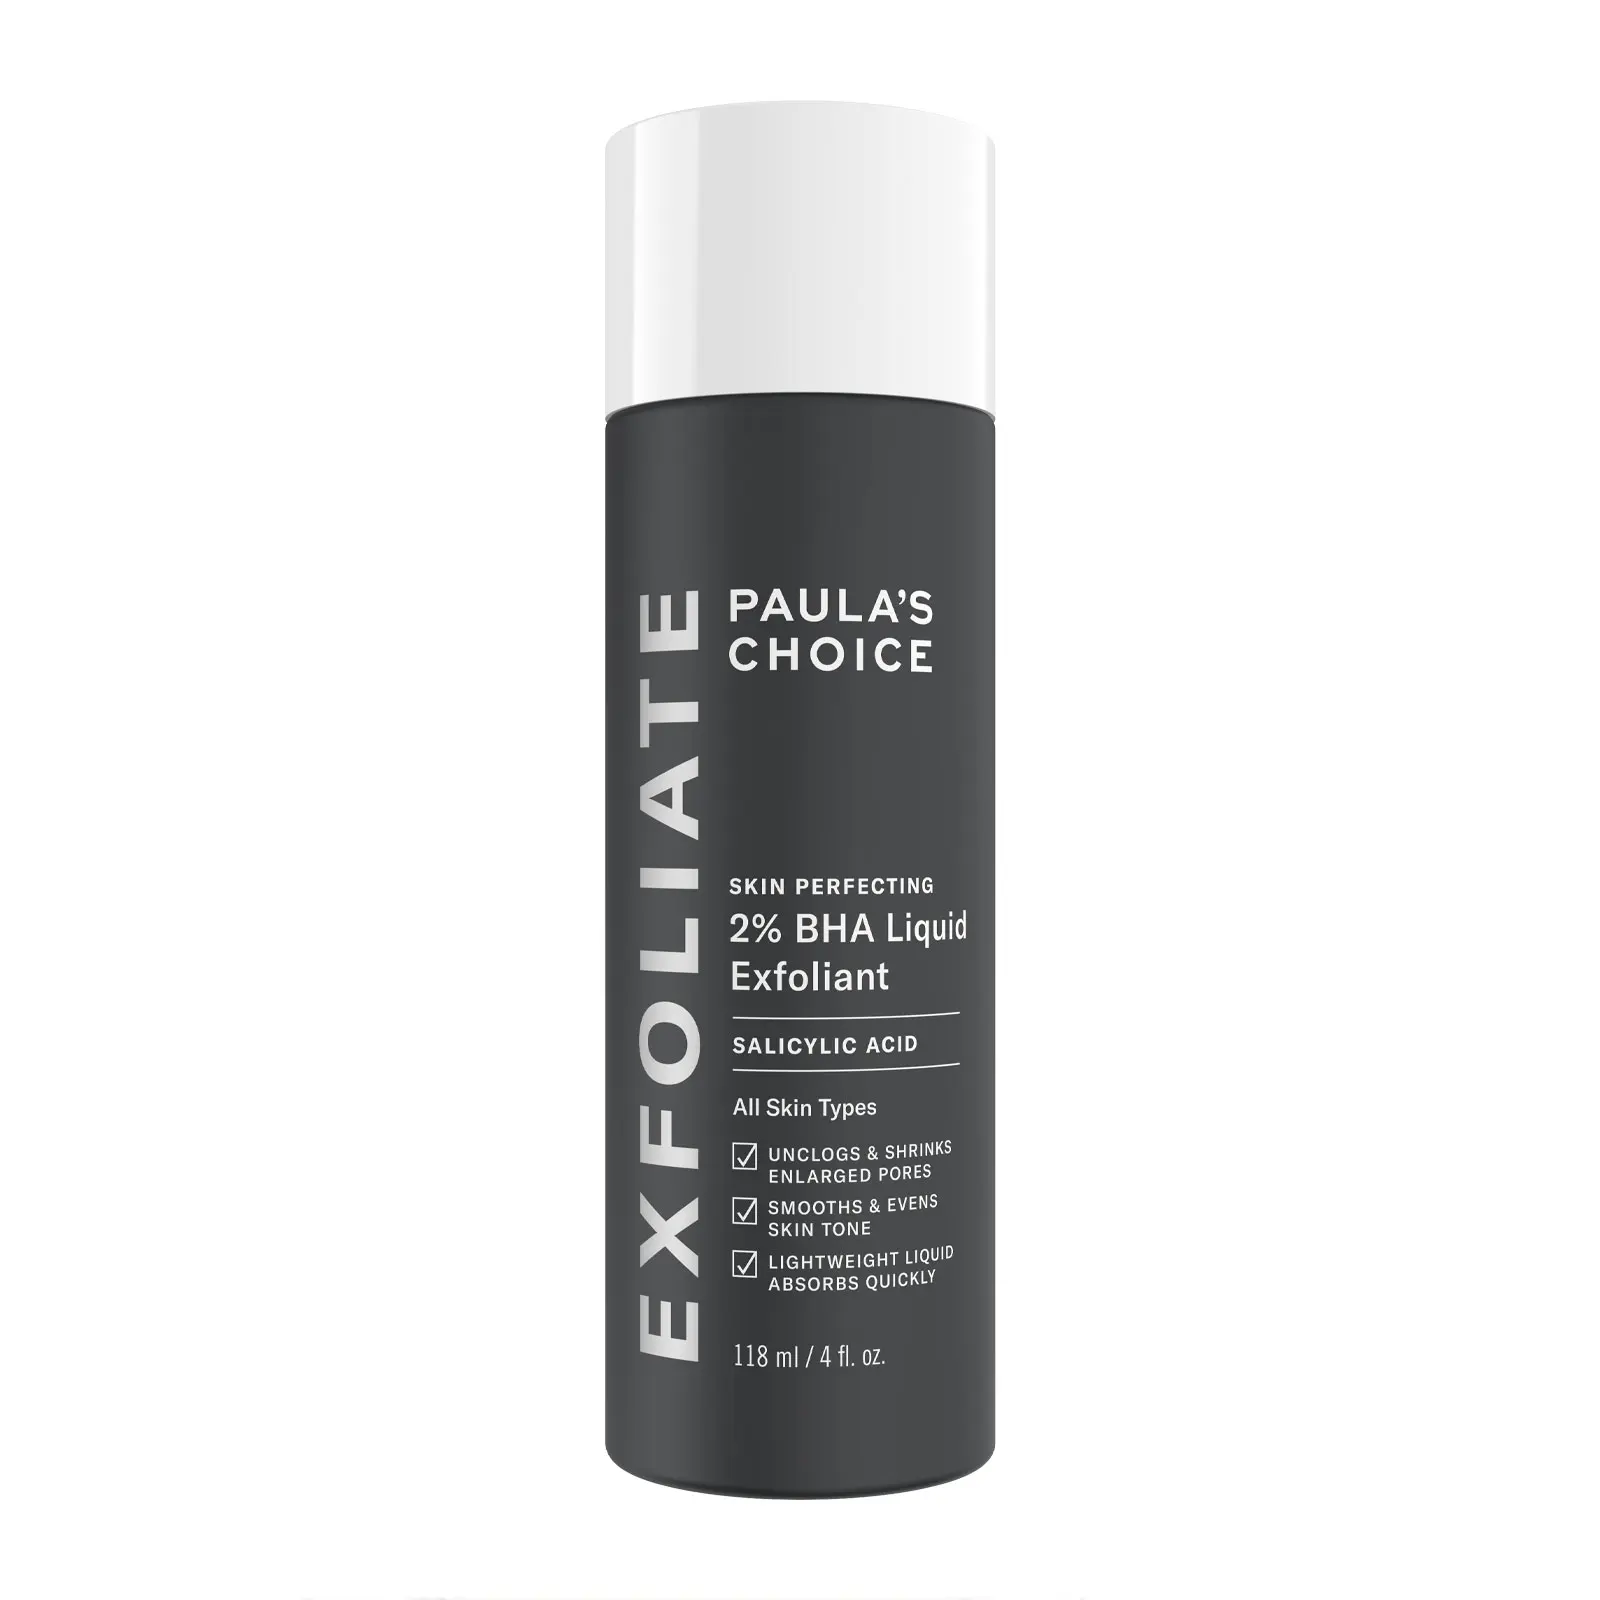 Paula's Choice Skin Perfecting 2% BHA Liquid Exfoliant 118ml Discounts and Cashback